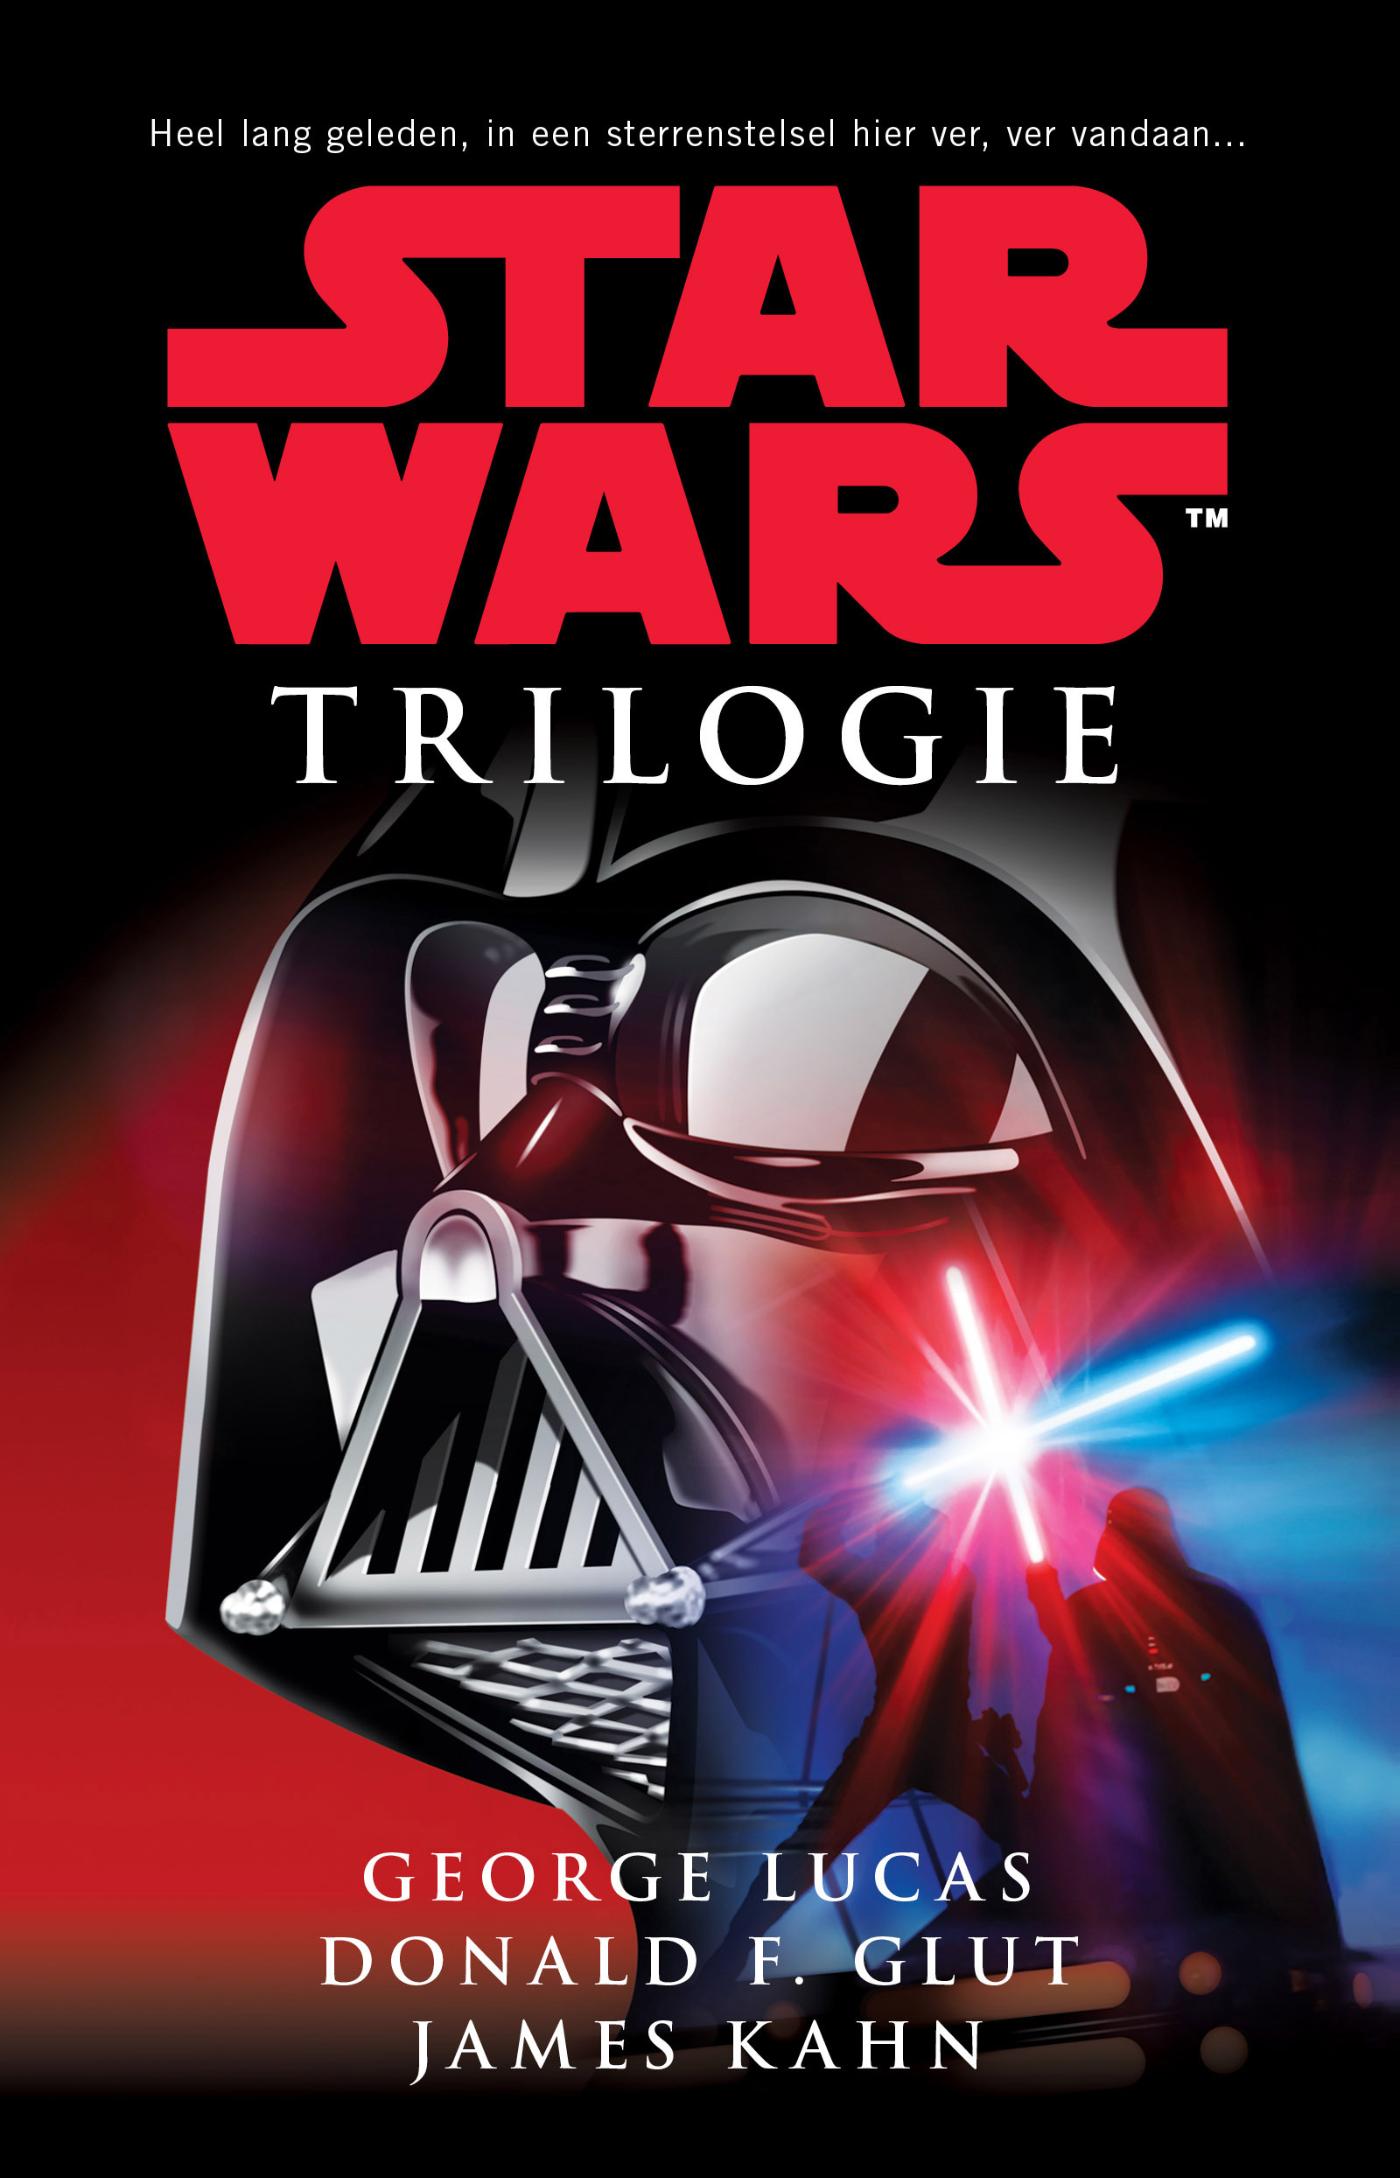 Star Wars trilogie (Ebook)